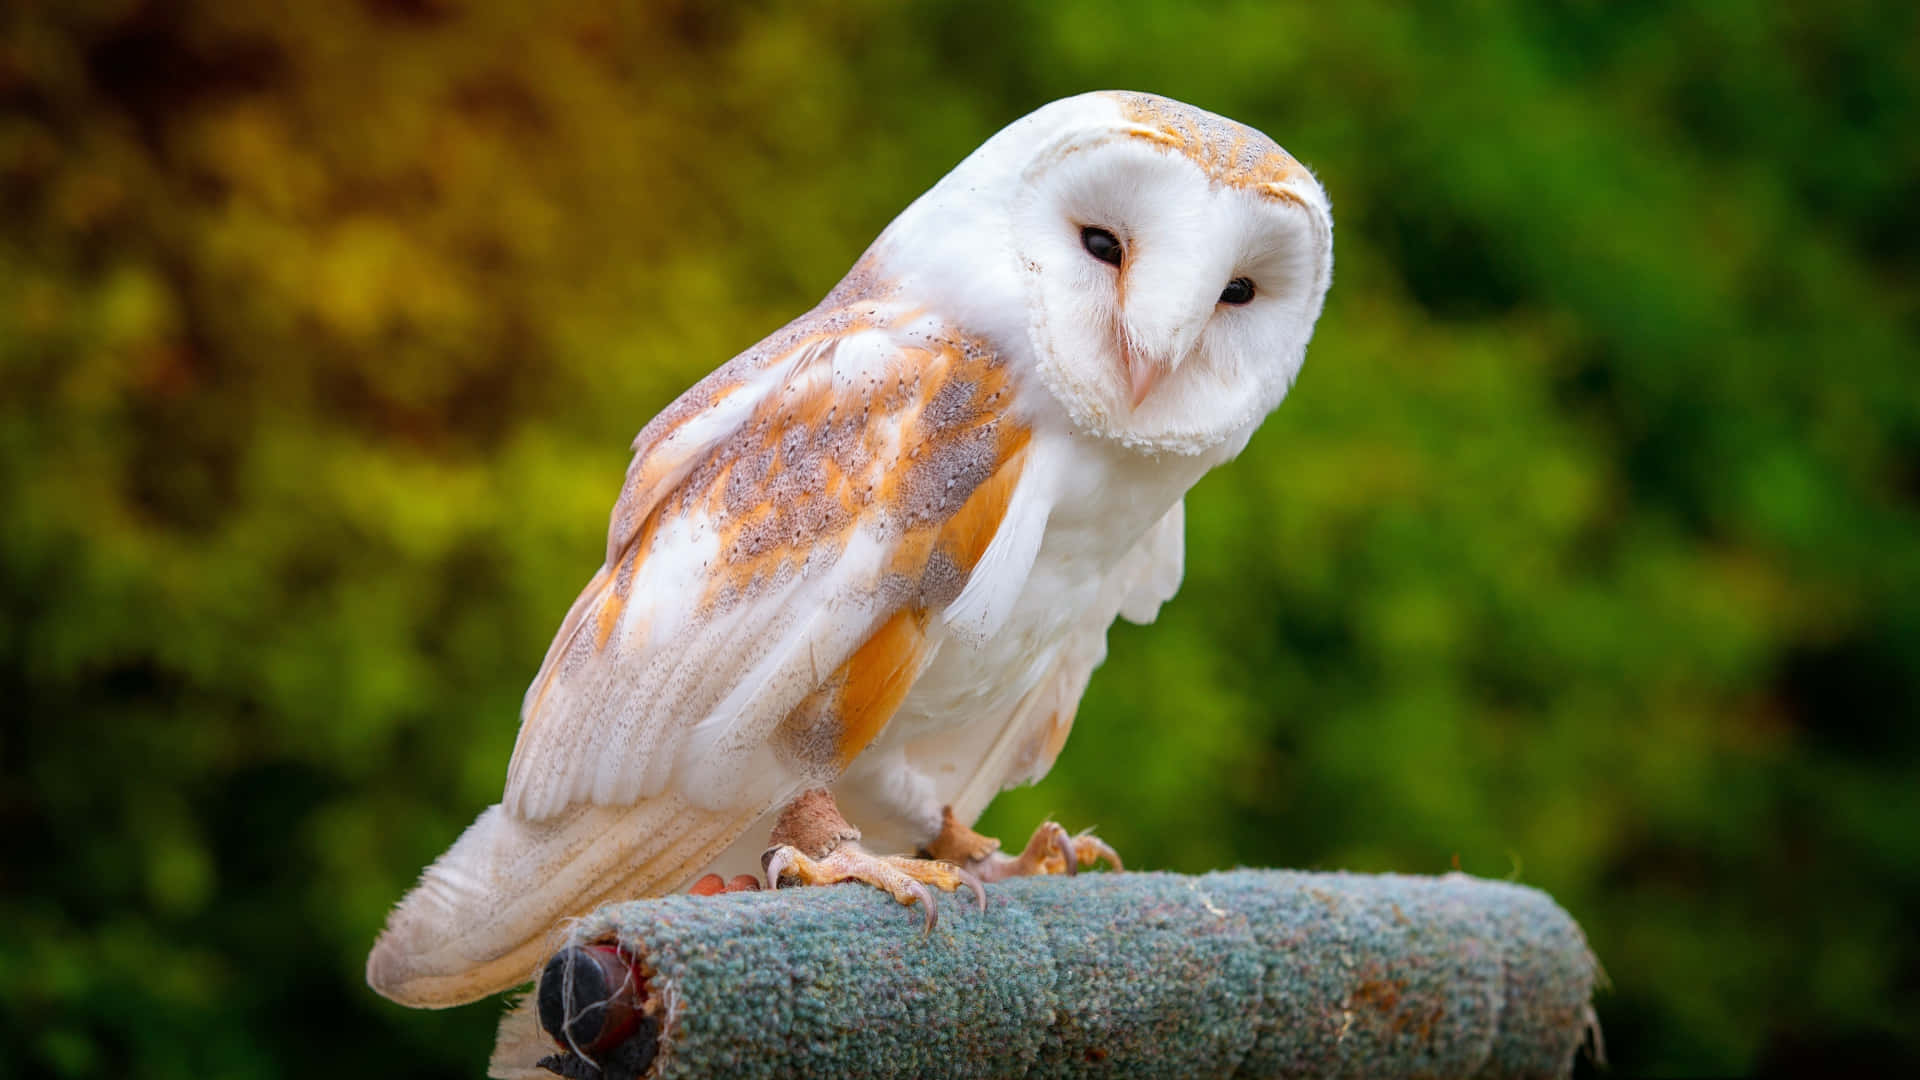 "A Majestic Barn Owl"